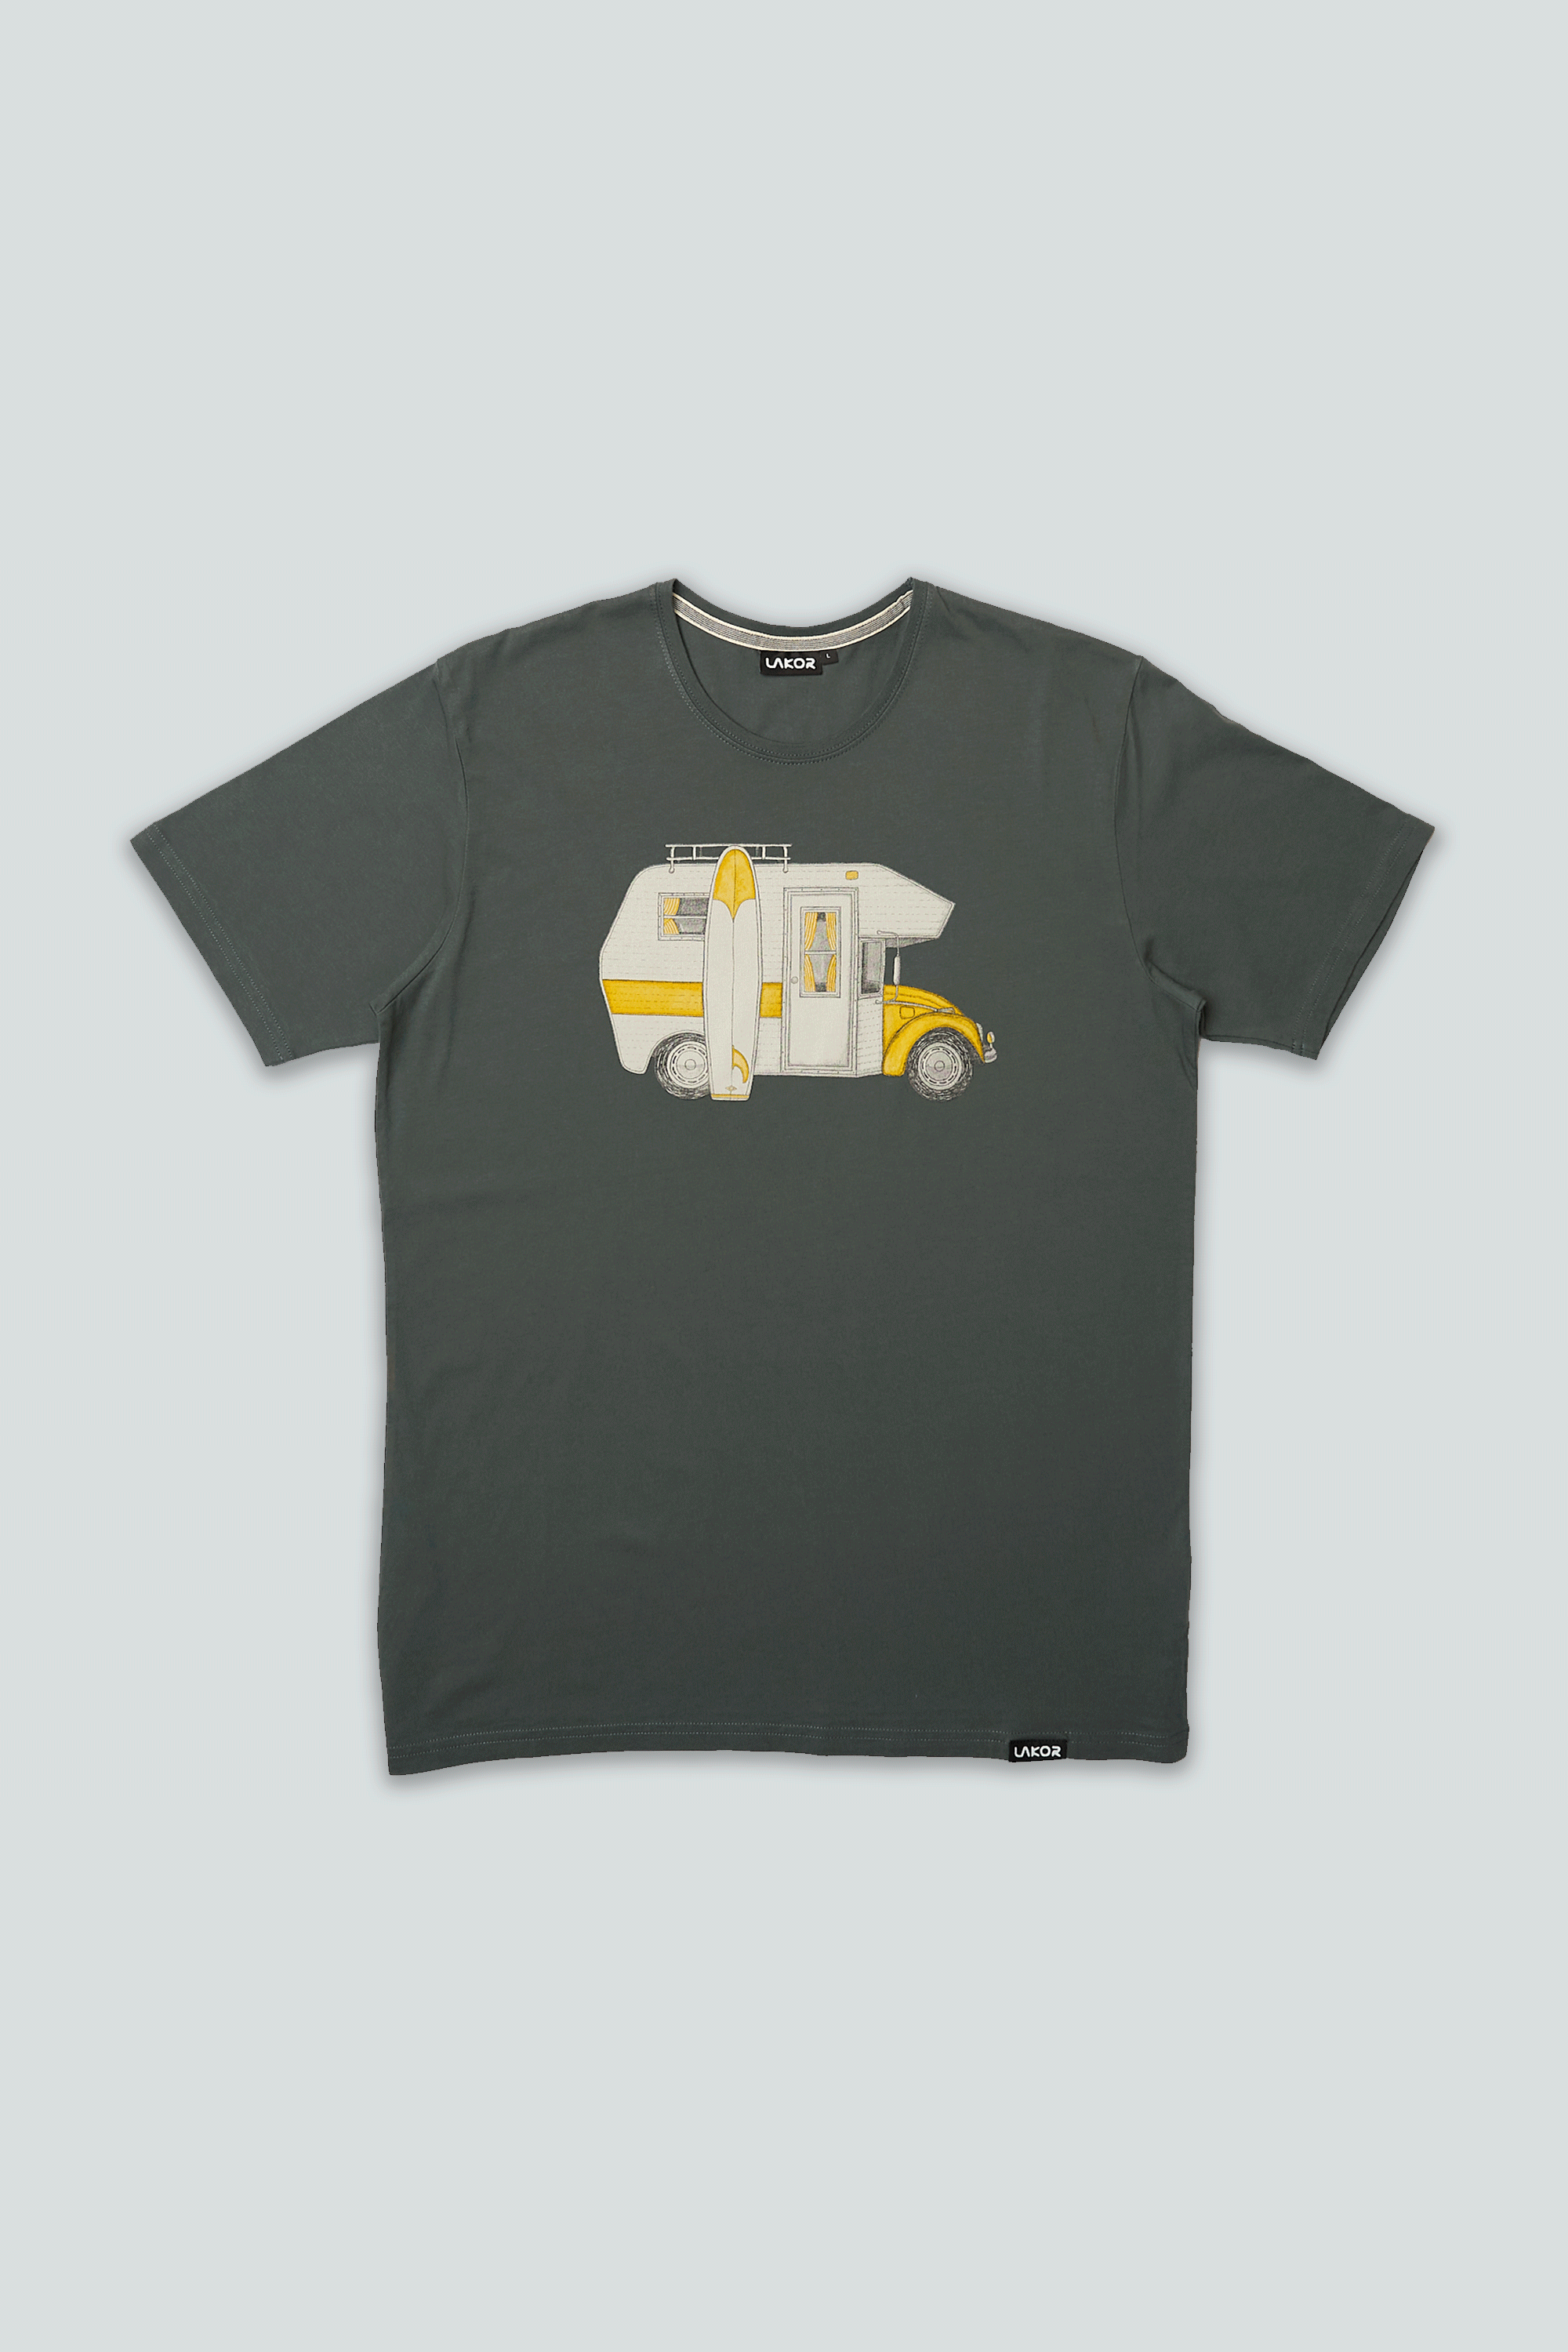 Car Camper T-shirt - Urban Chic